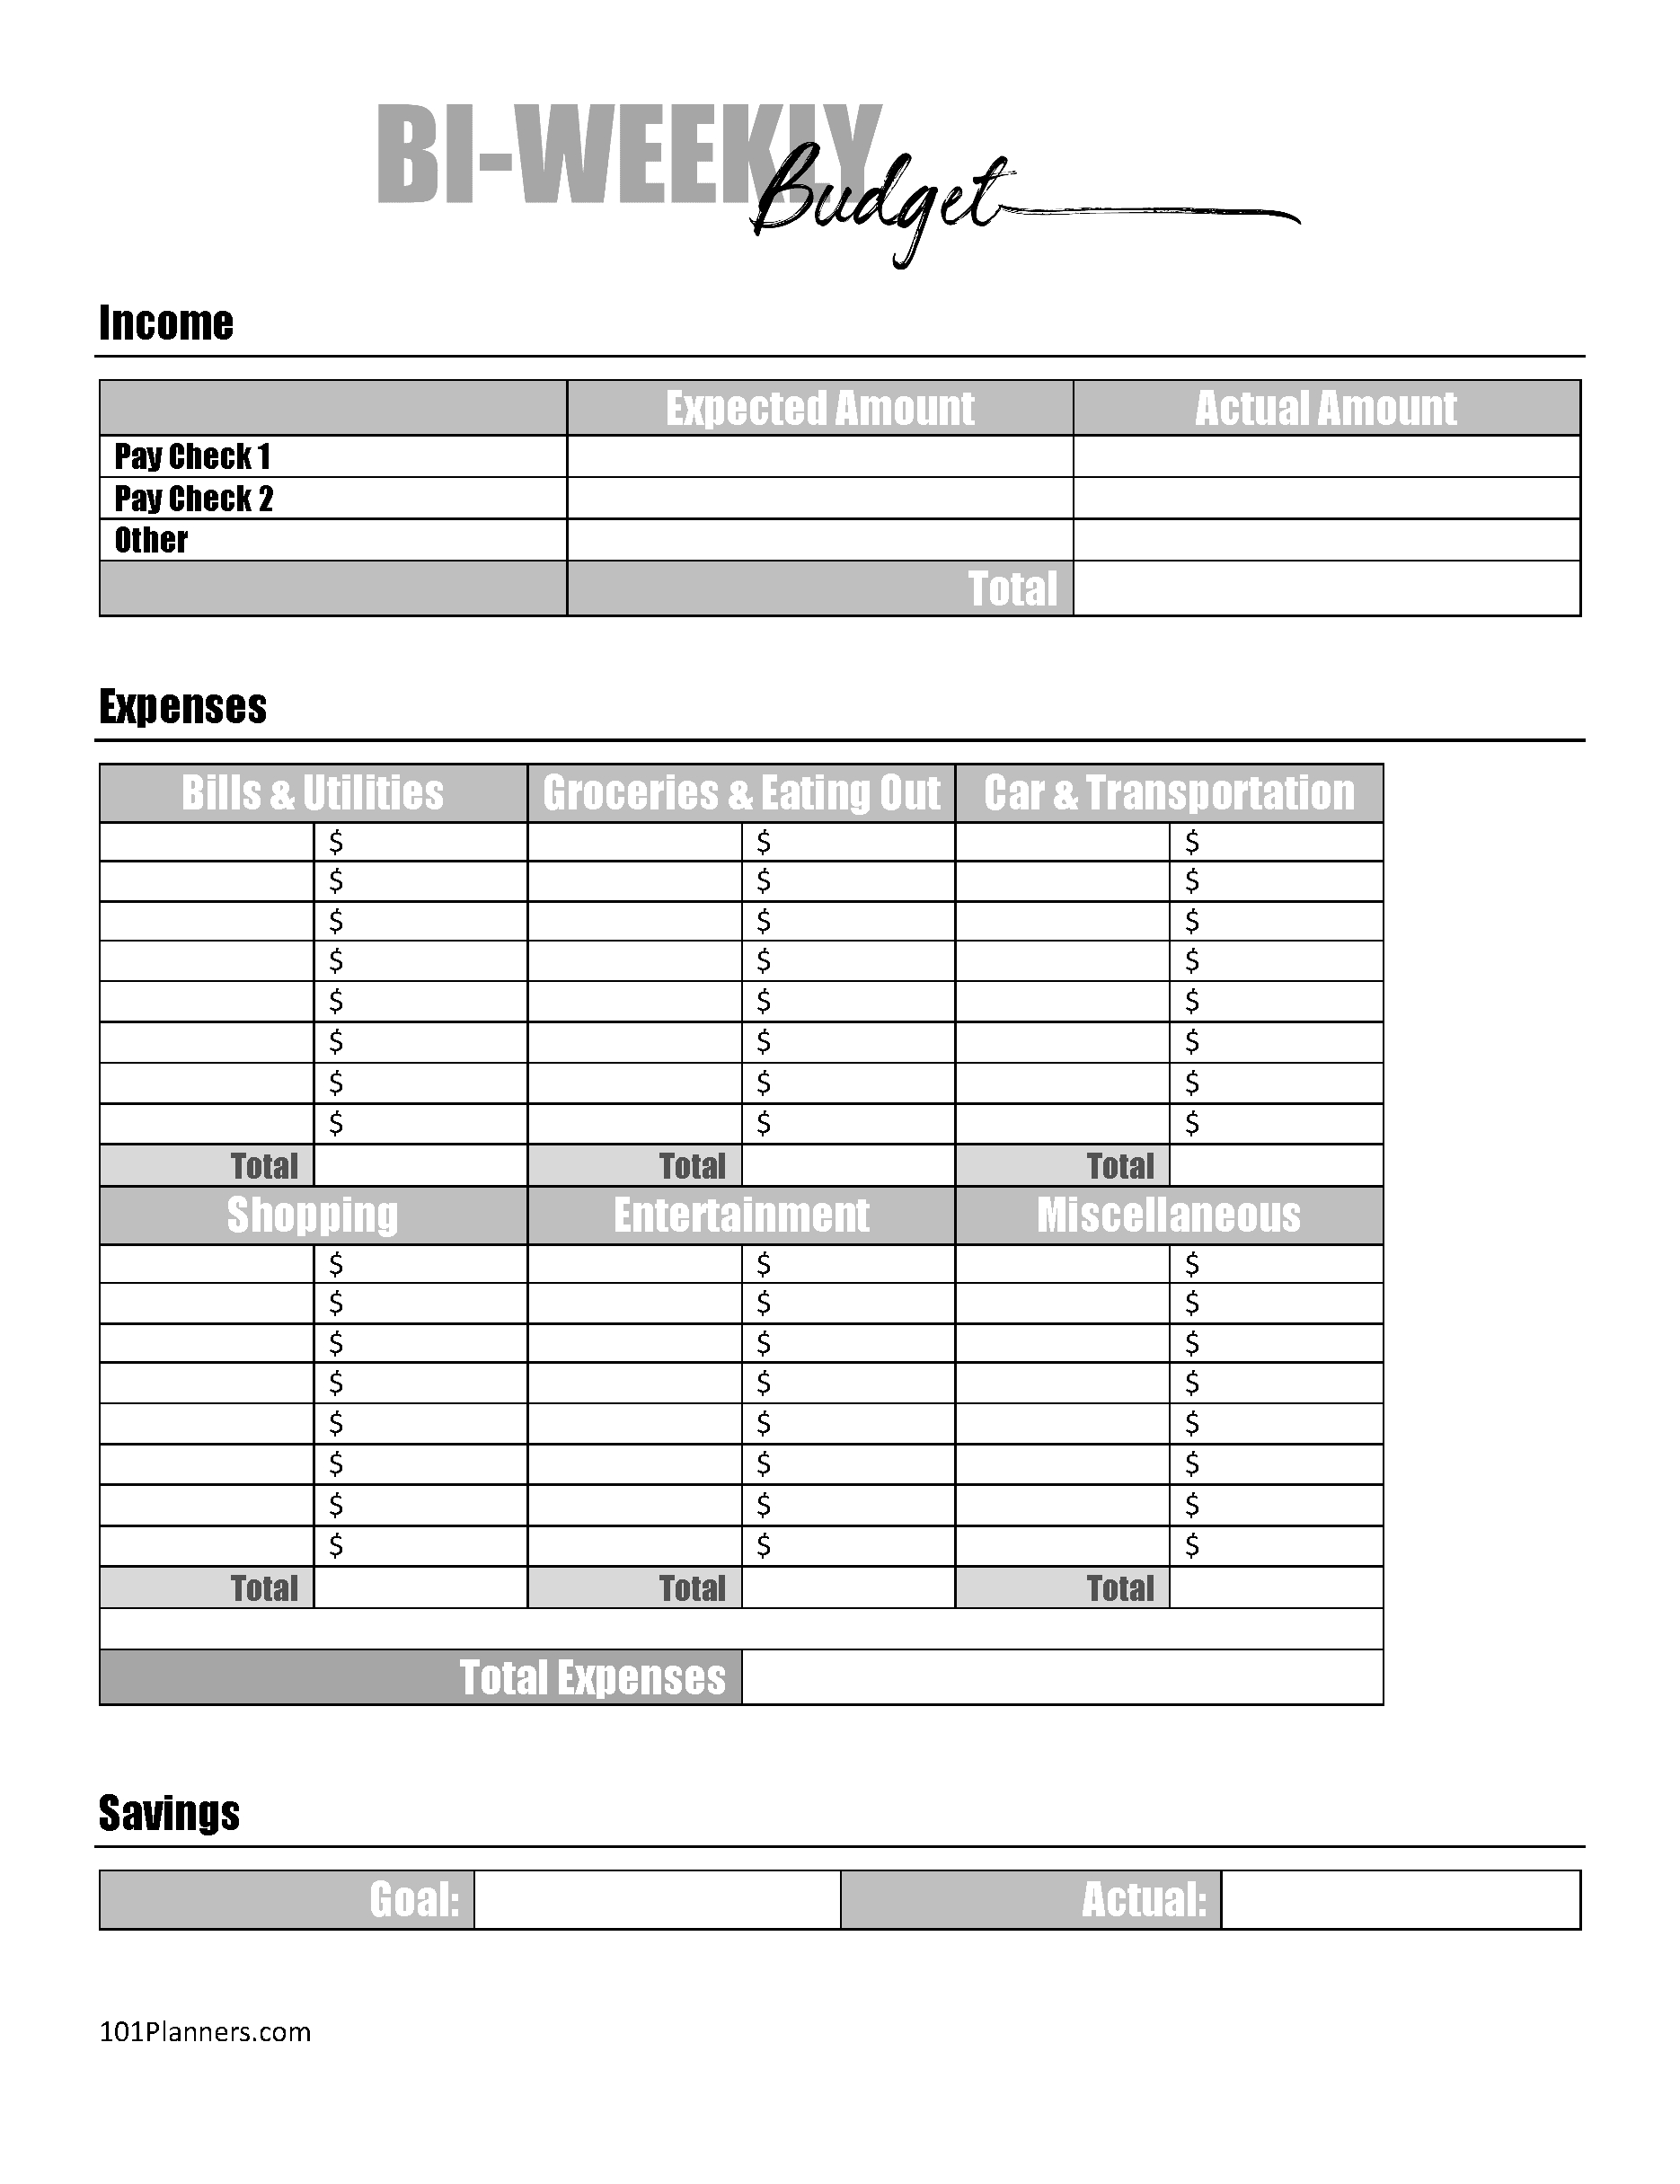 Free Budget Sheet Template | Printable And Editable with regard to Free Printable Bi Weekly Budget Template